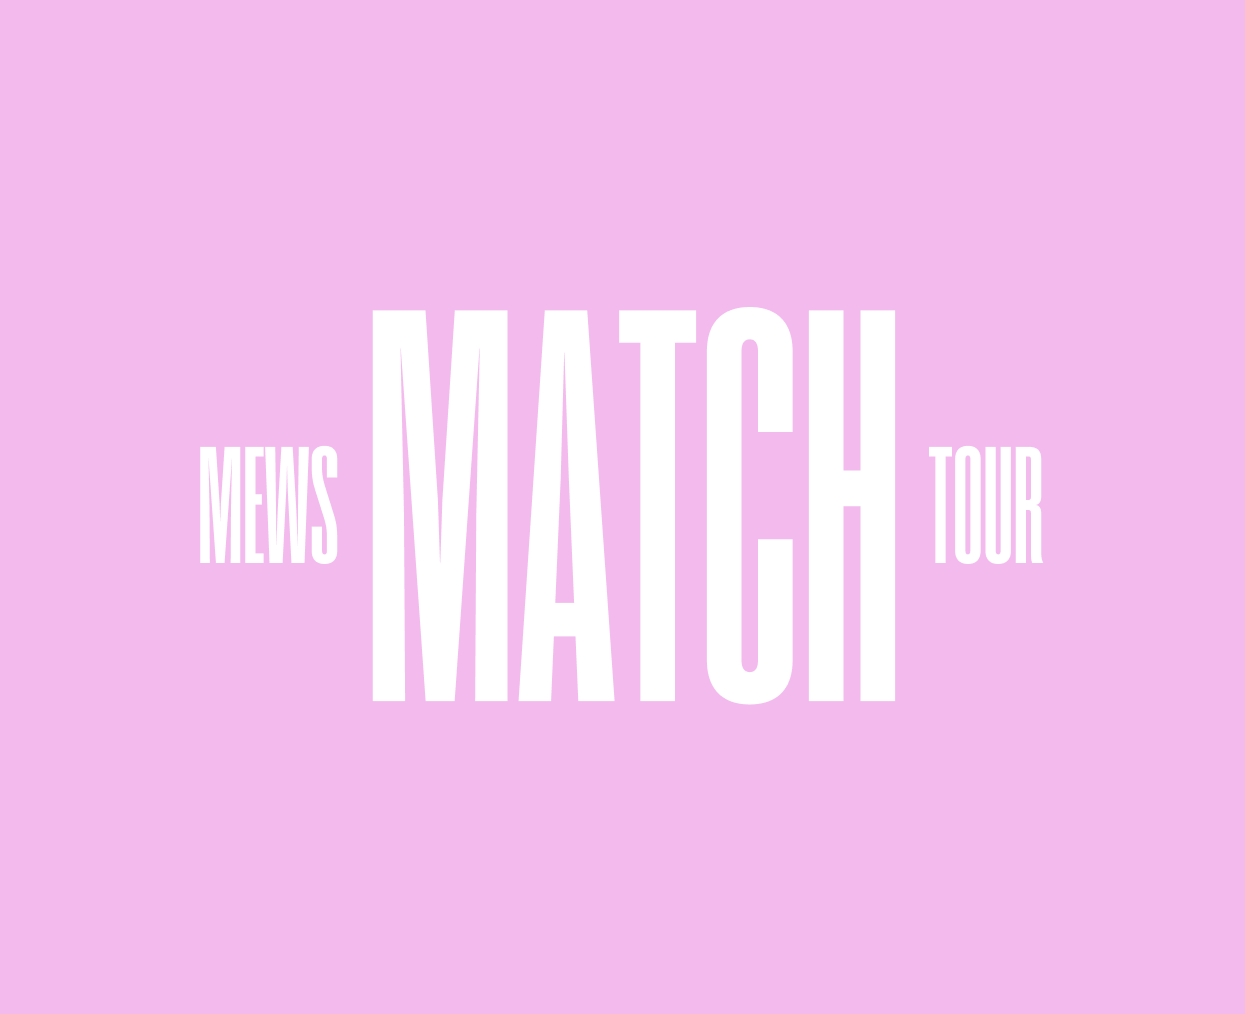 Mews_Match_Tour_HERO-1